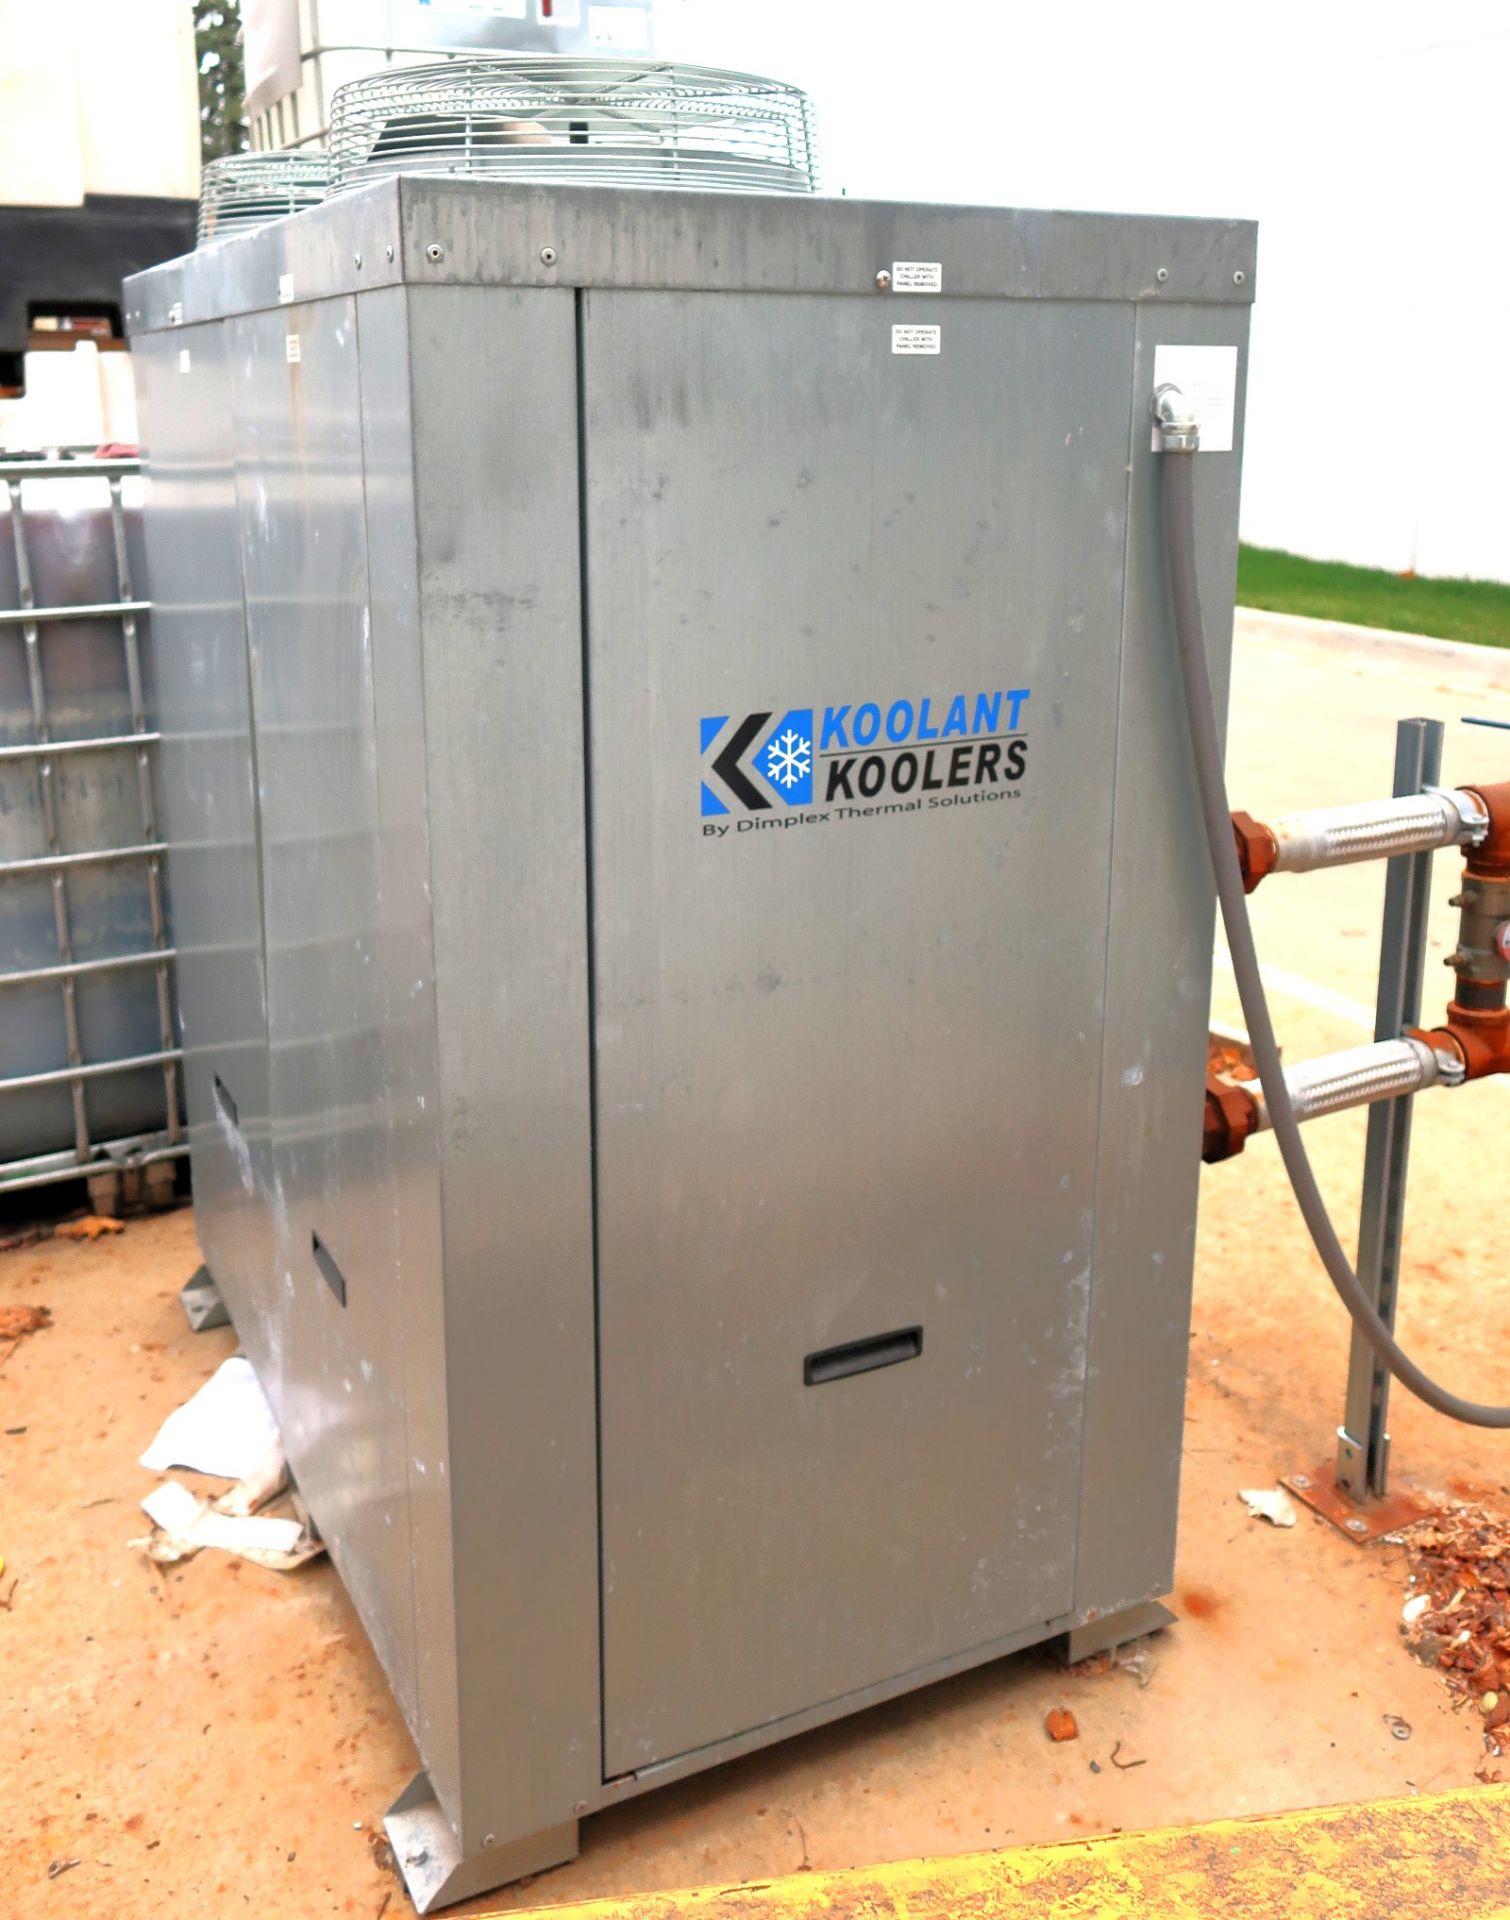 2015 Koolant Koolers Air Cooled 10 Ton Chiller, SN W042609-001